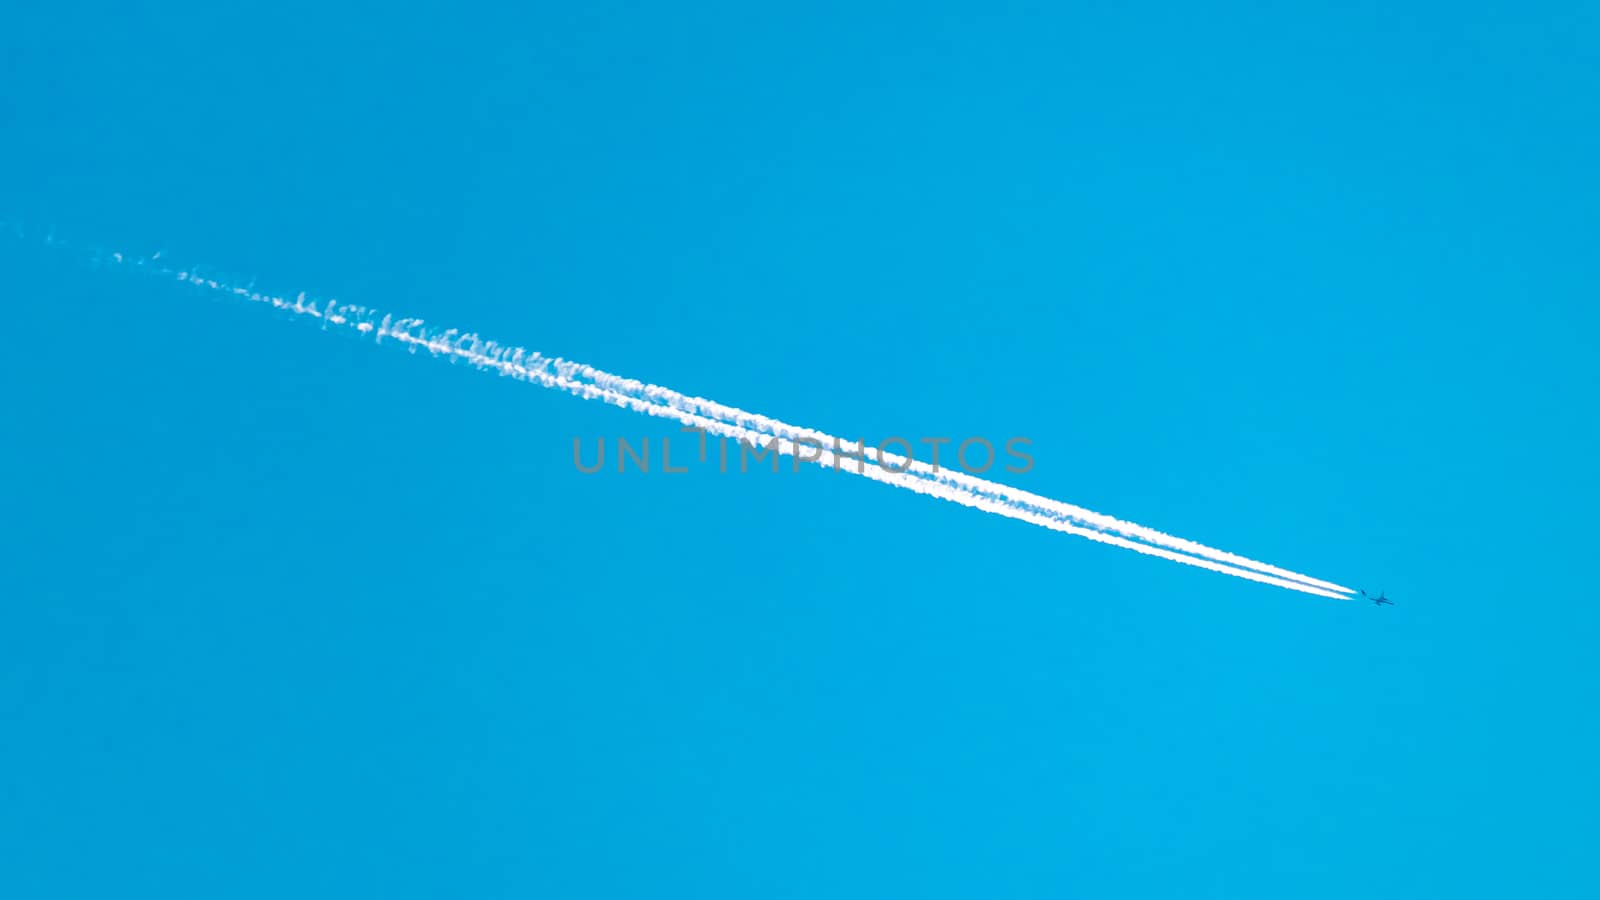 An airplane flies high overhead, leaving a white vapor trail streaking across the blue sky behind it.